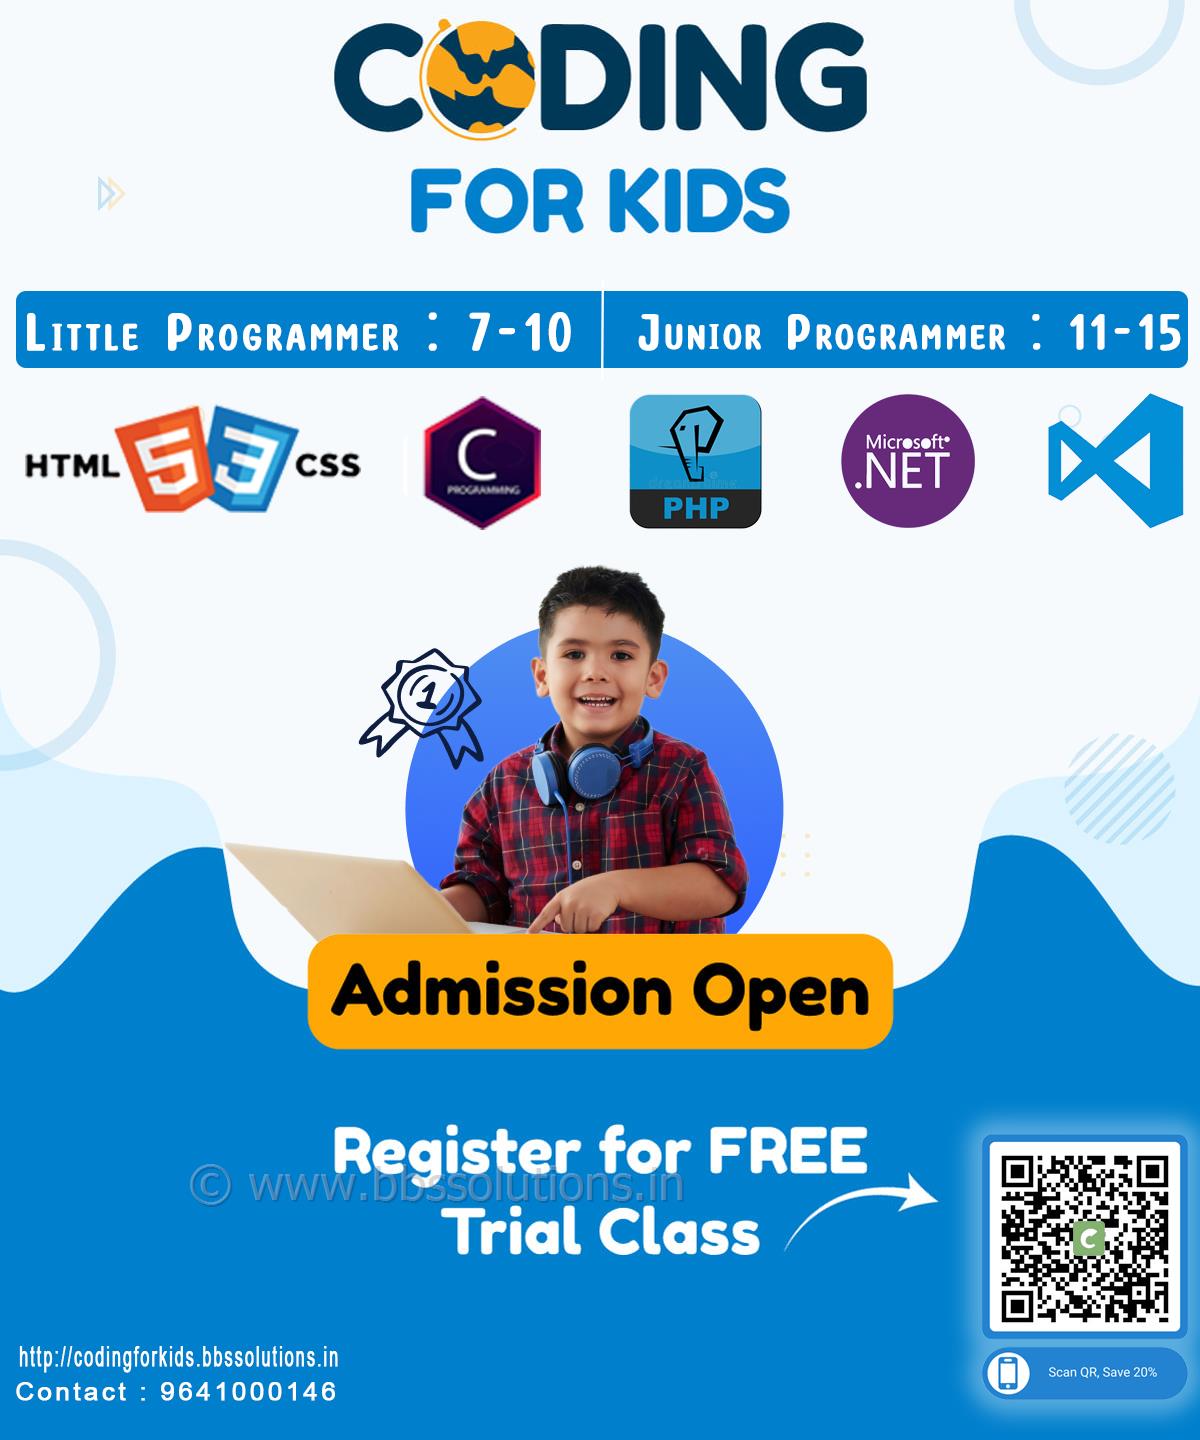 Coding for Kids: The Best Coding Classes in Dhupguri, Jalpaiguri, Siliguri, Falakata, Alipurduar, Mathavanga, Mainaguri, Birpara, Banarhat, and Gairkata with Coding for Kids